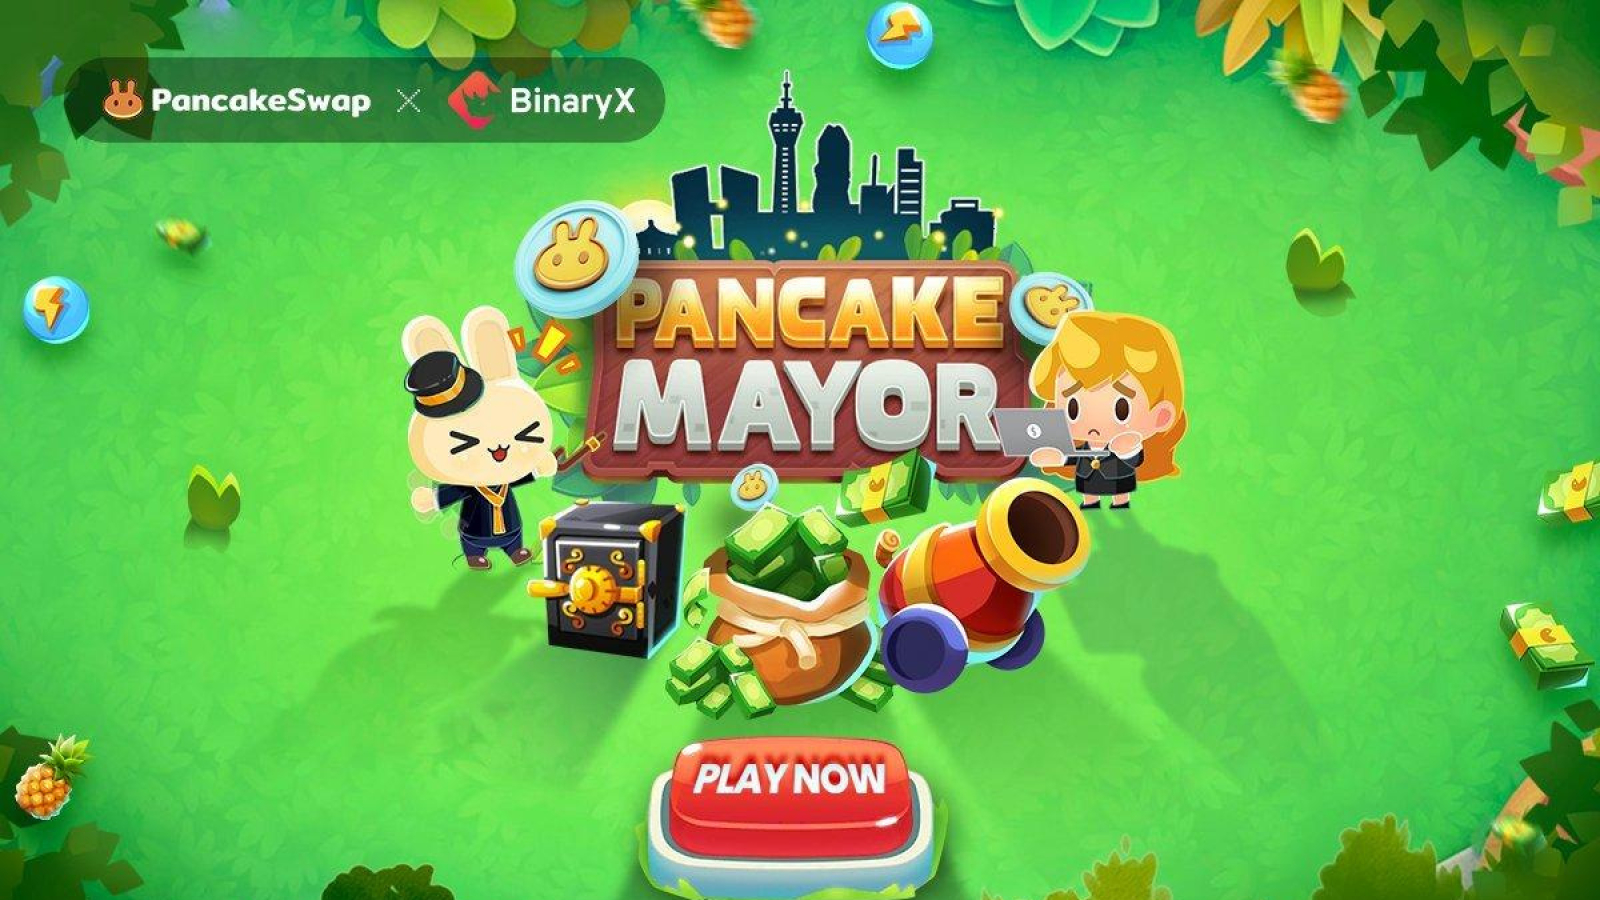 BinaryX launches city building game Pancake Mayor on PancakeSwap’s new marketplace